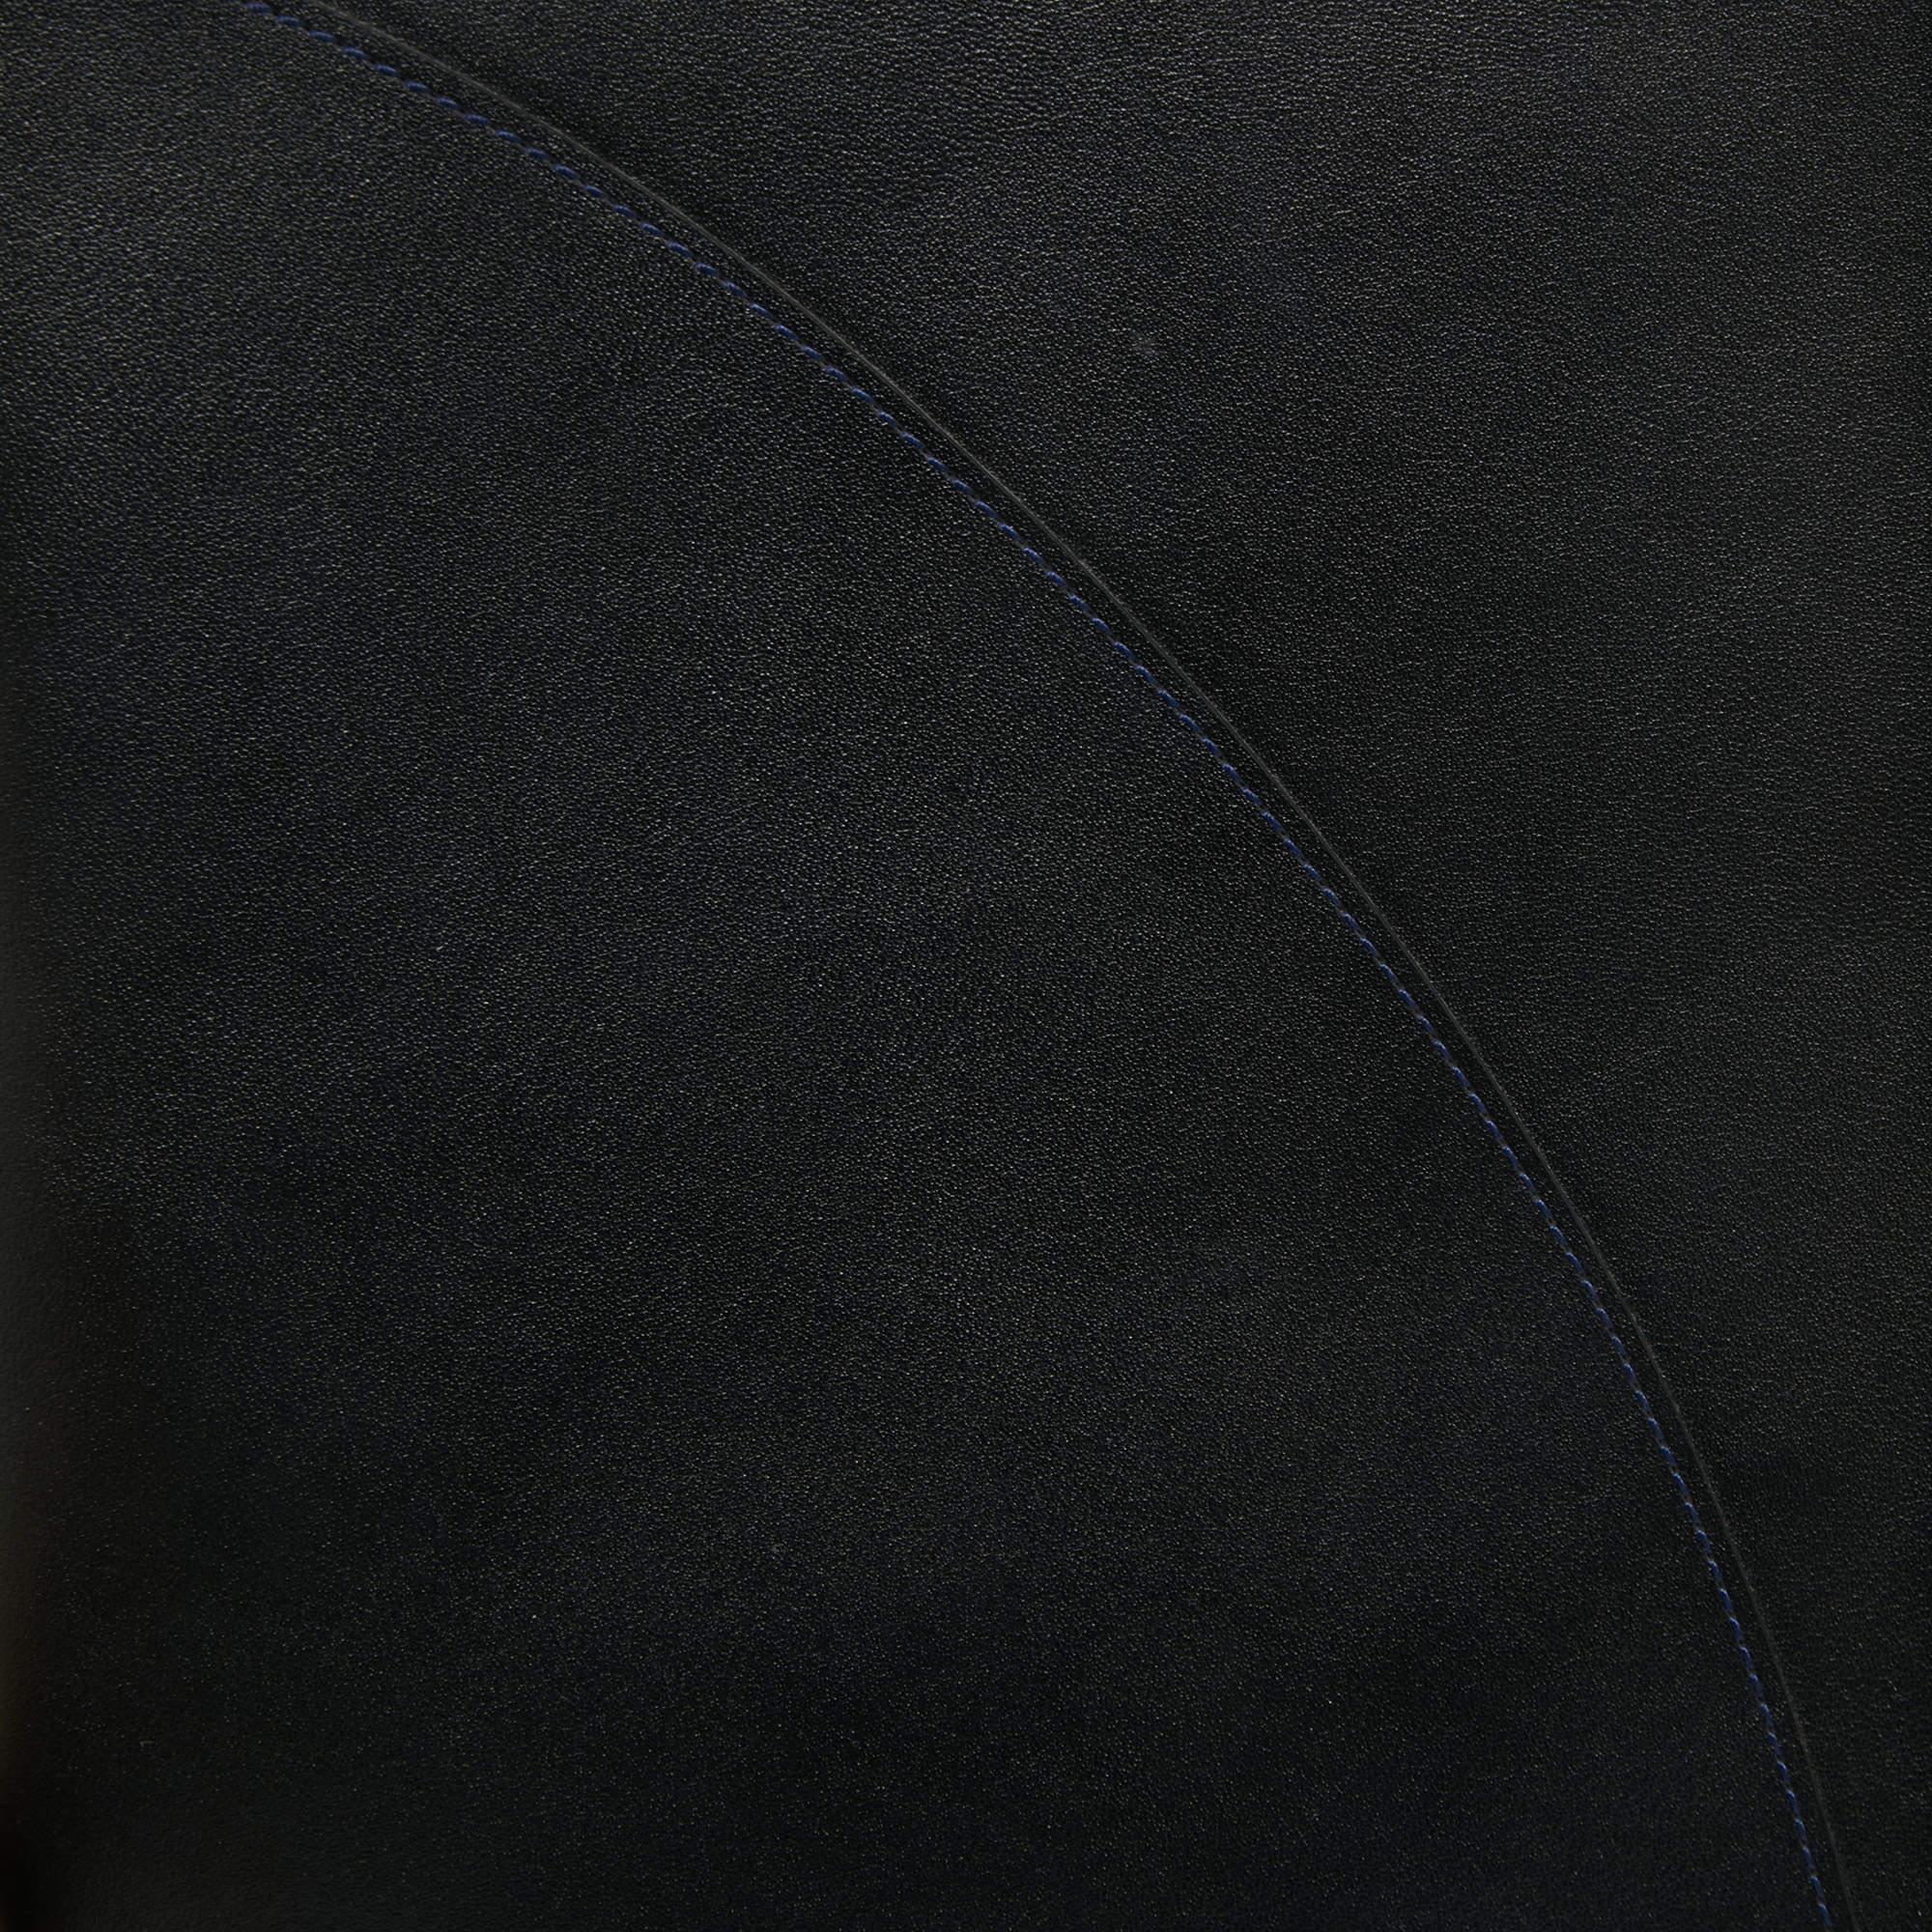 S.T.Dupont Black Leather Wristlet Pouch 7